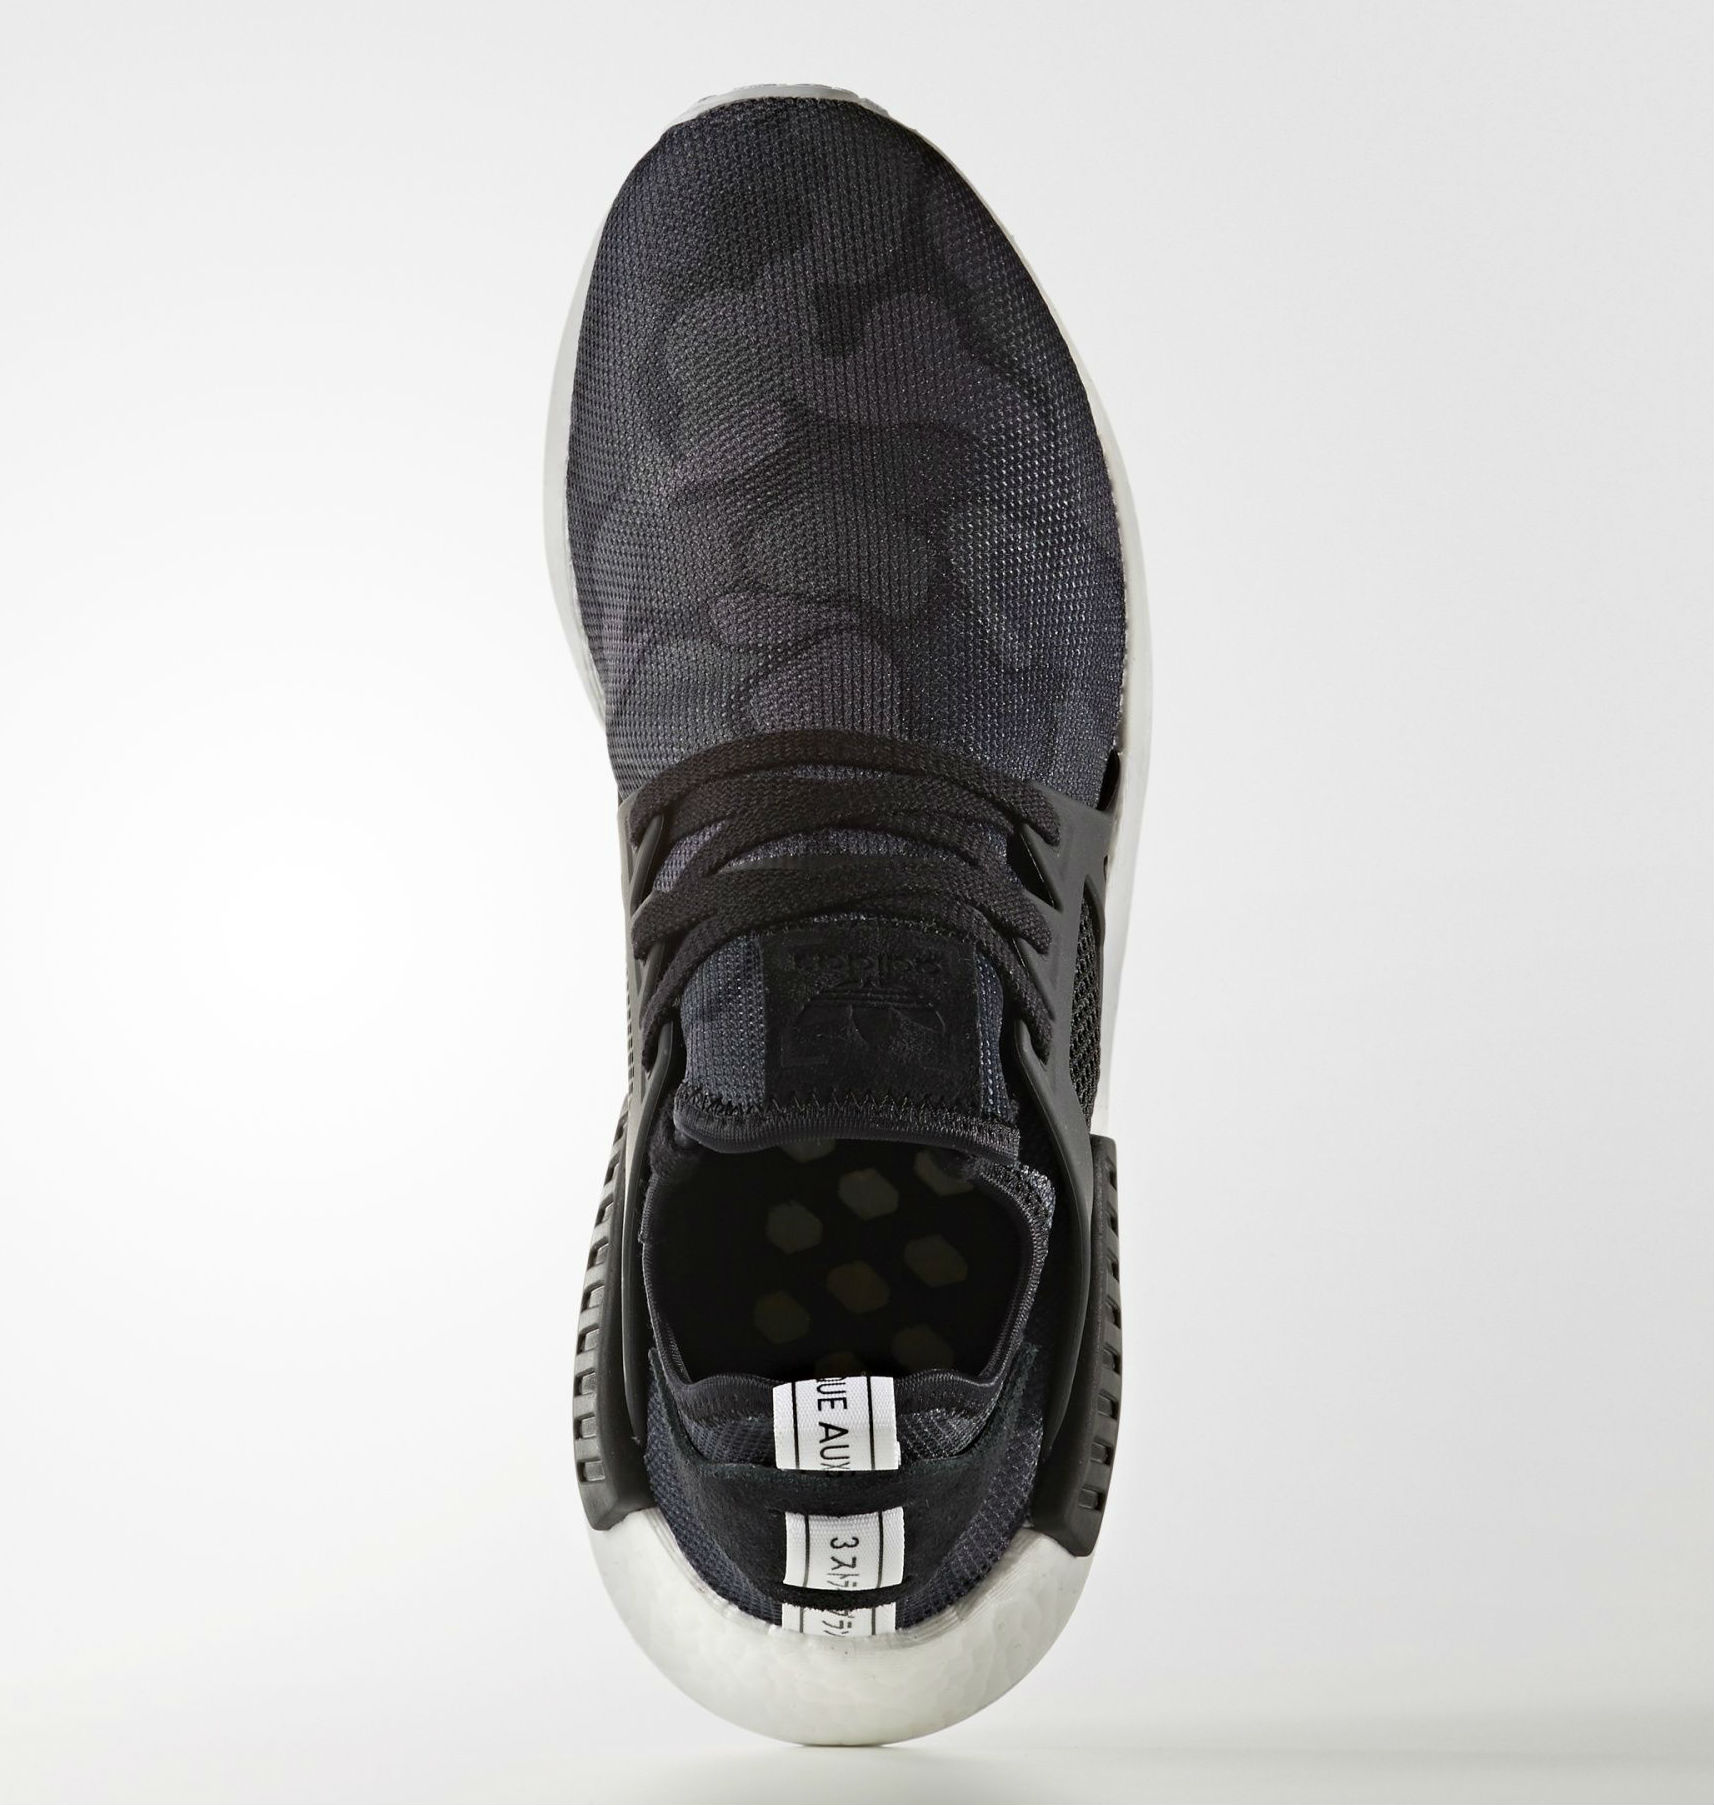 Adidas Nmd Xr1 Duck Camo Black Size 11 Bump